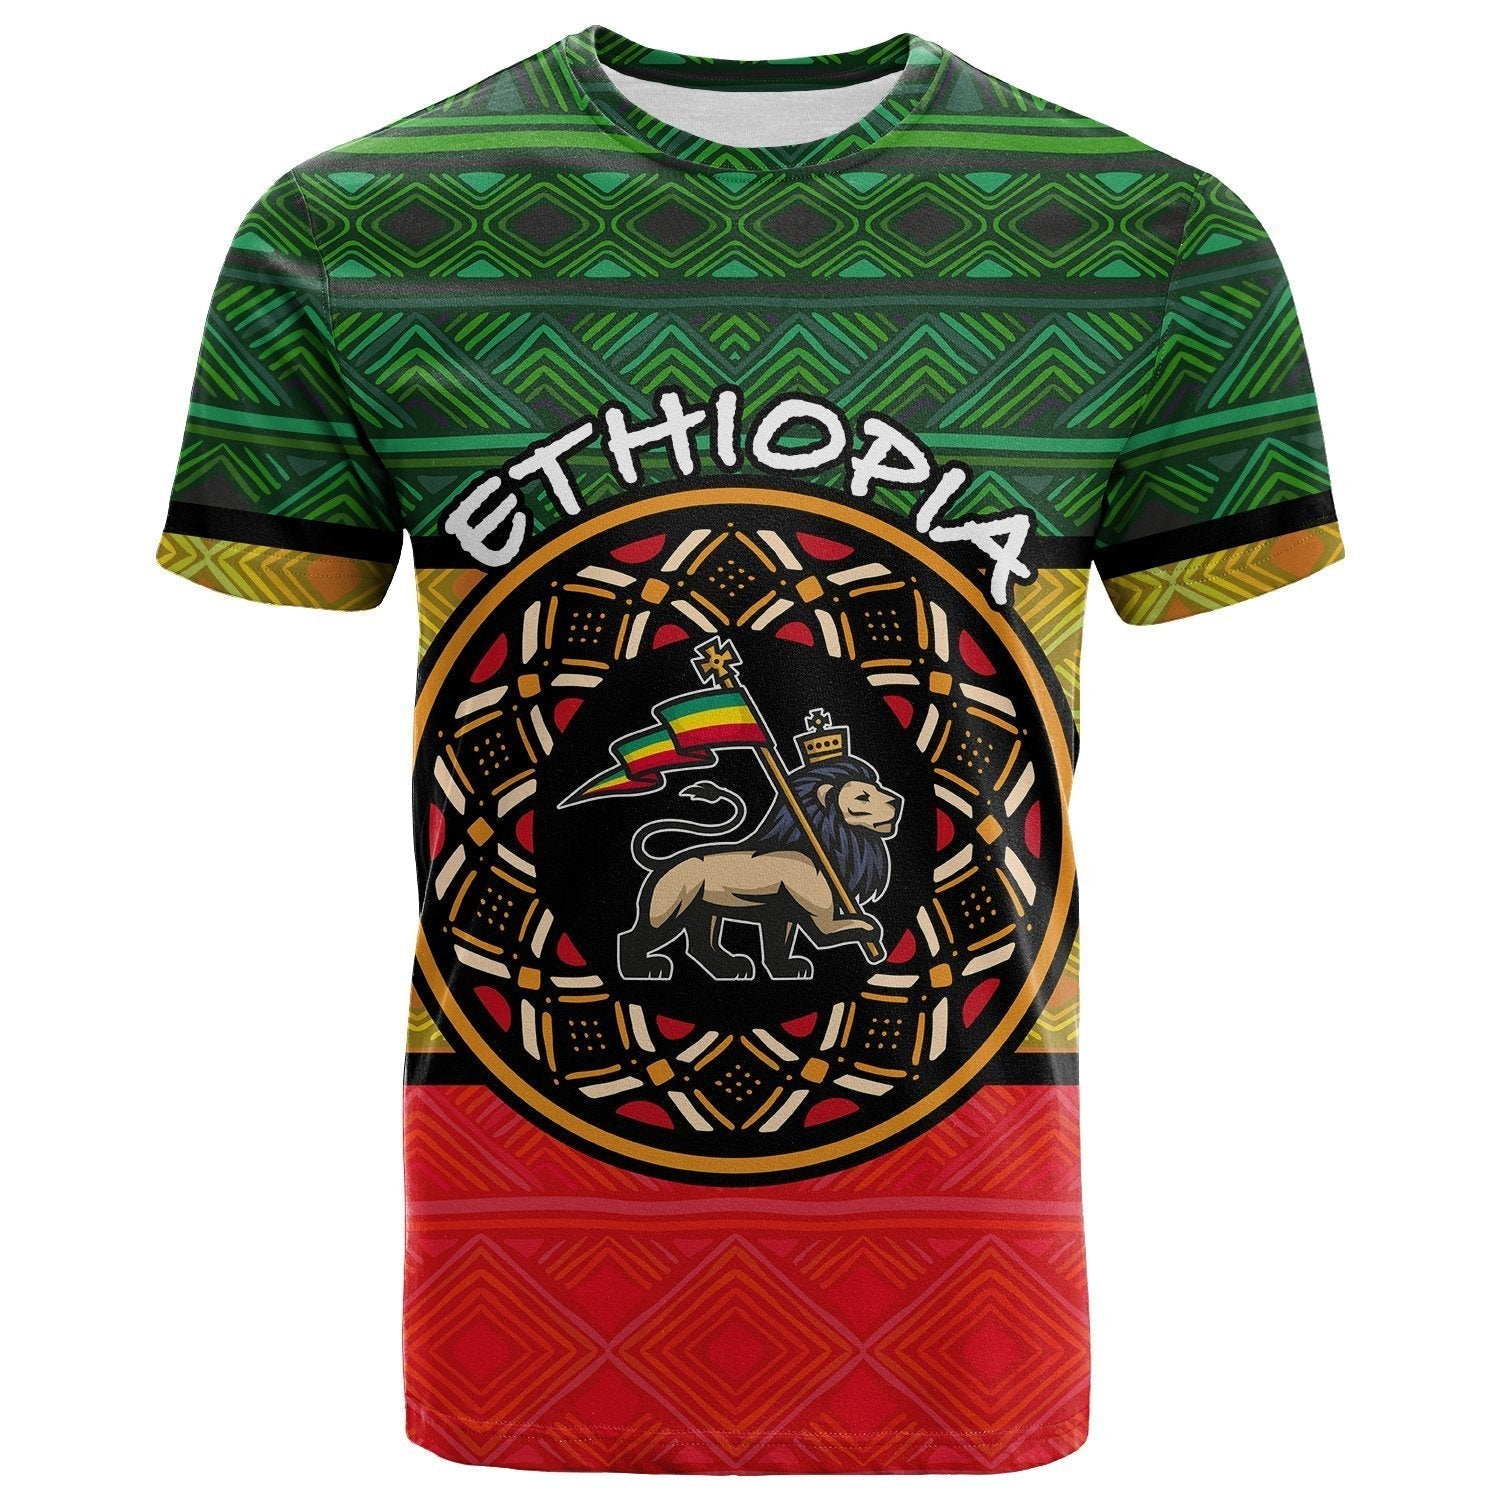 ethiopia-t-shirt-african-geometric-ornament-patterns